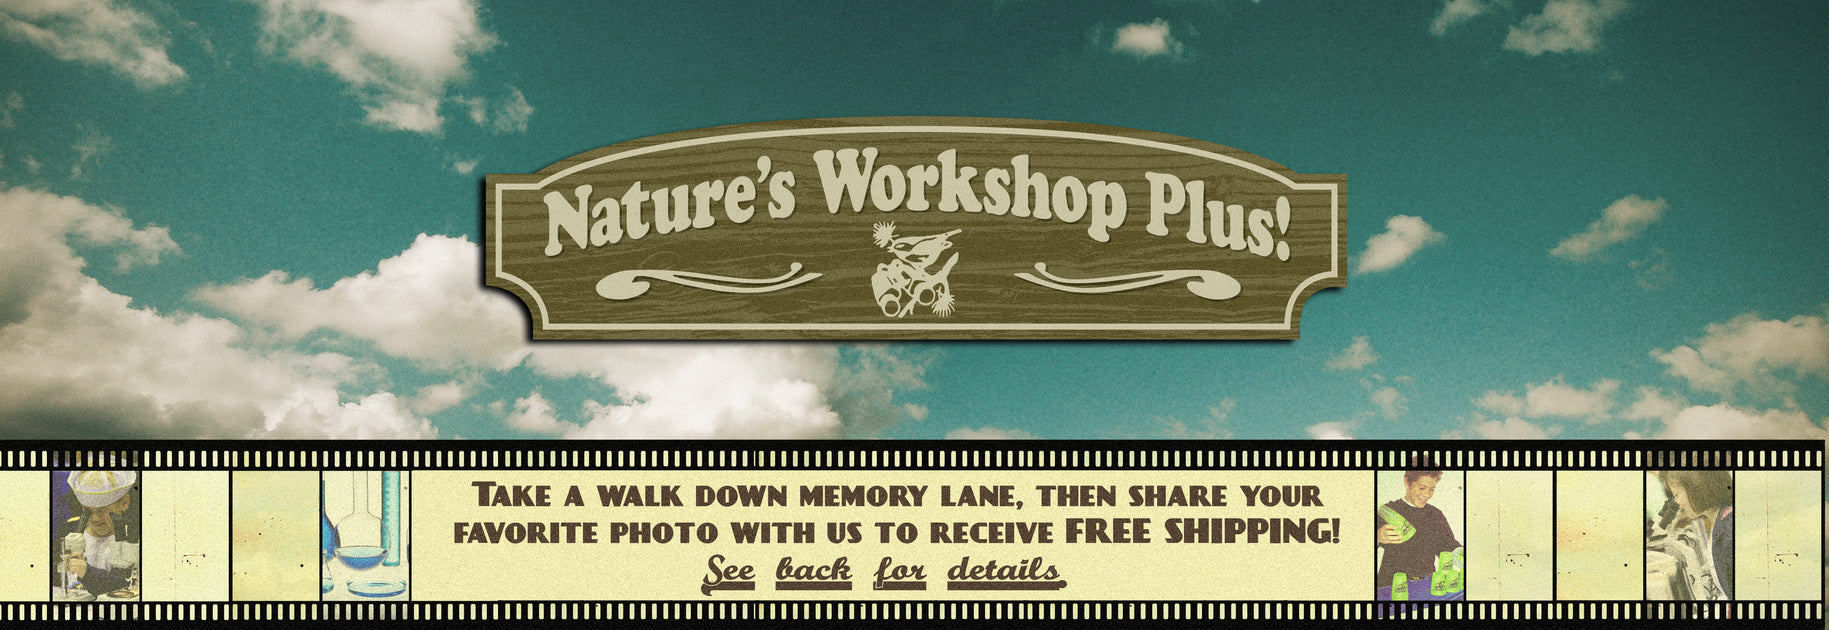 Nature's Workshop Plus